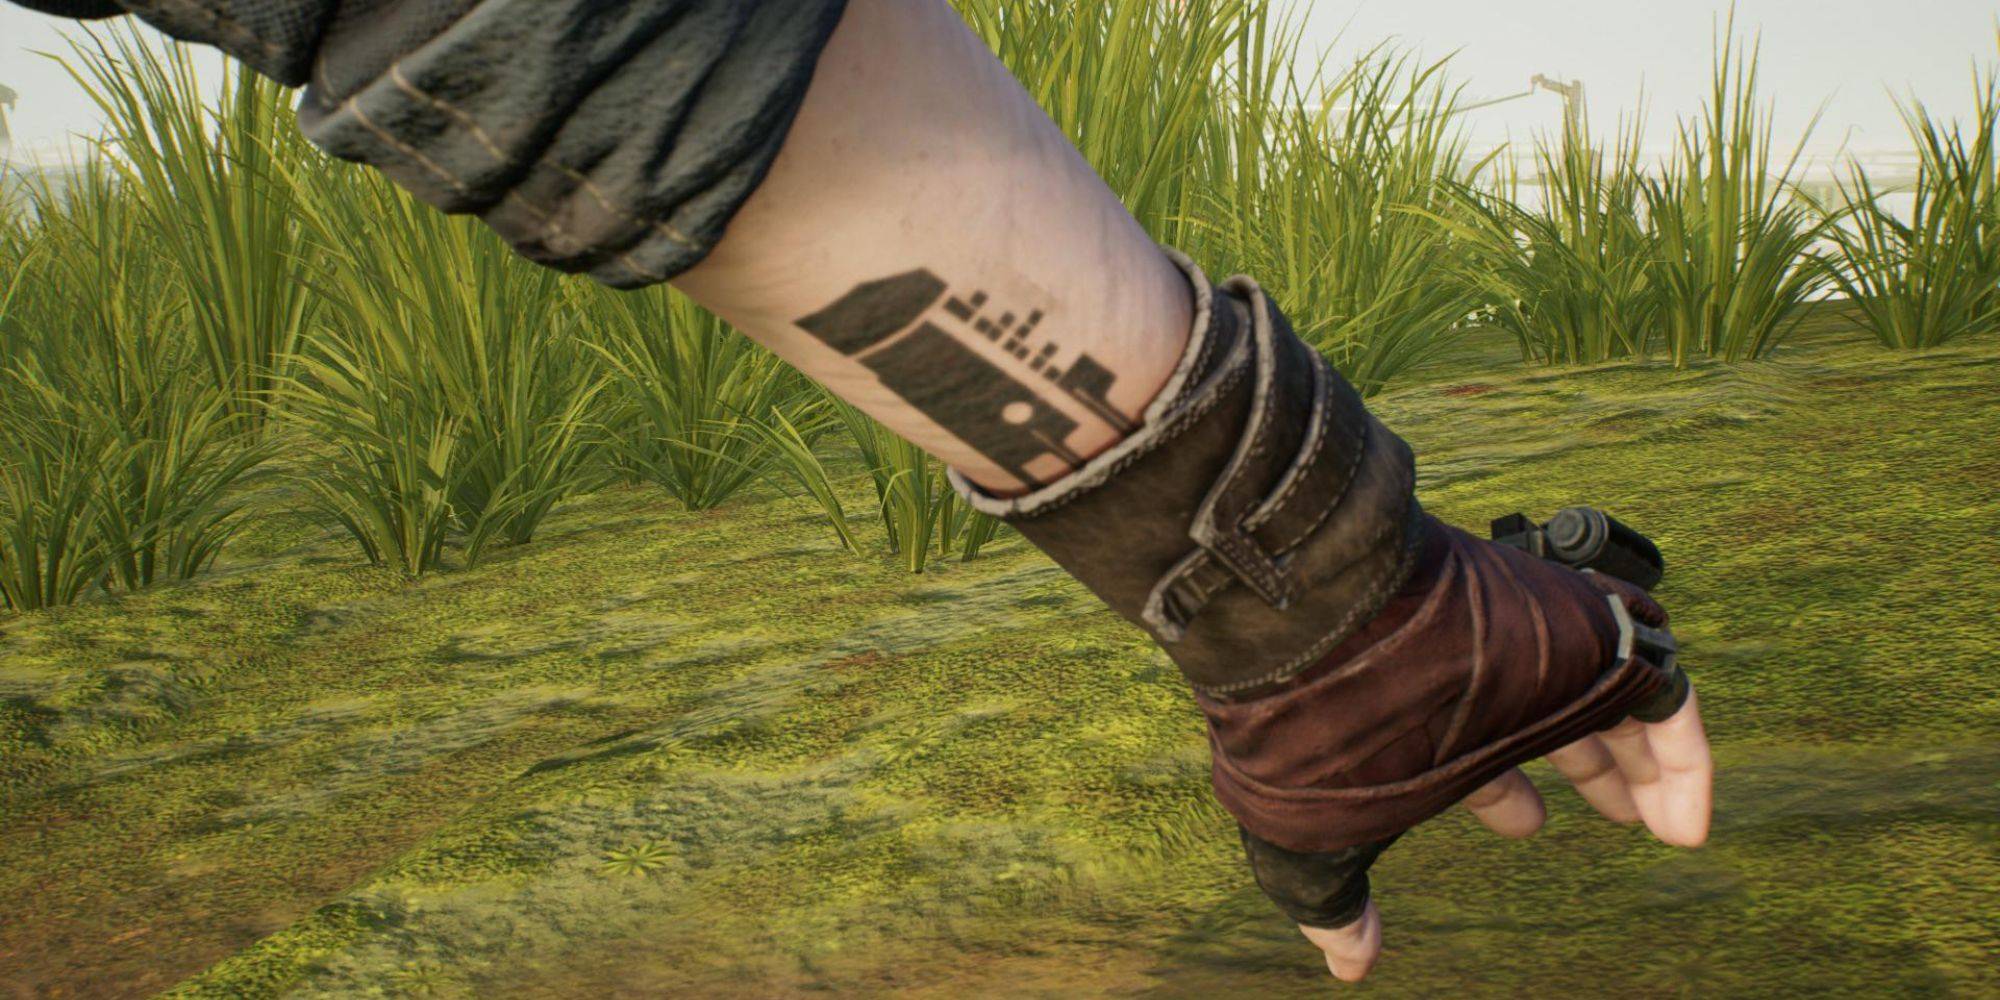 Cal kestis arm tattoo